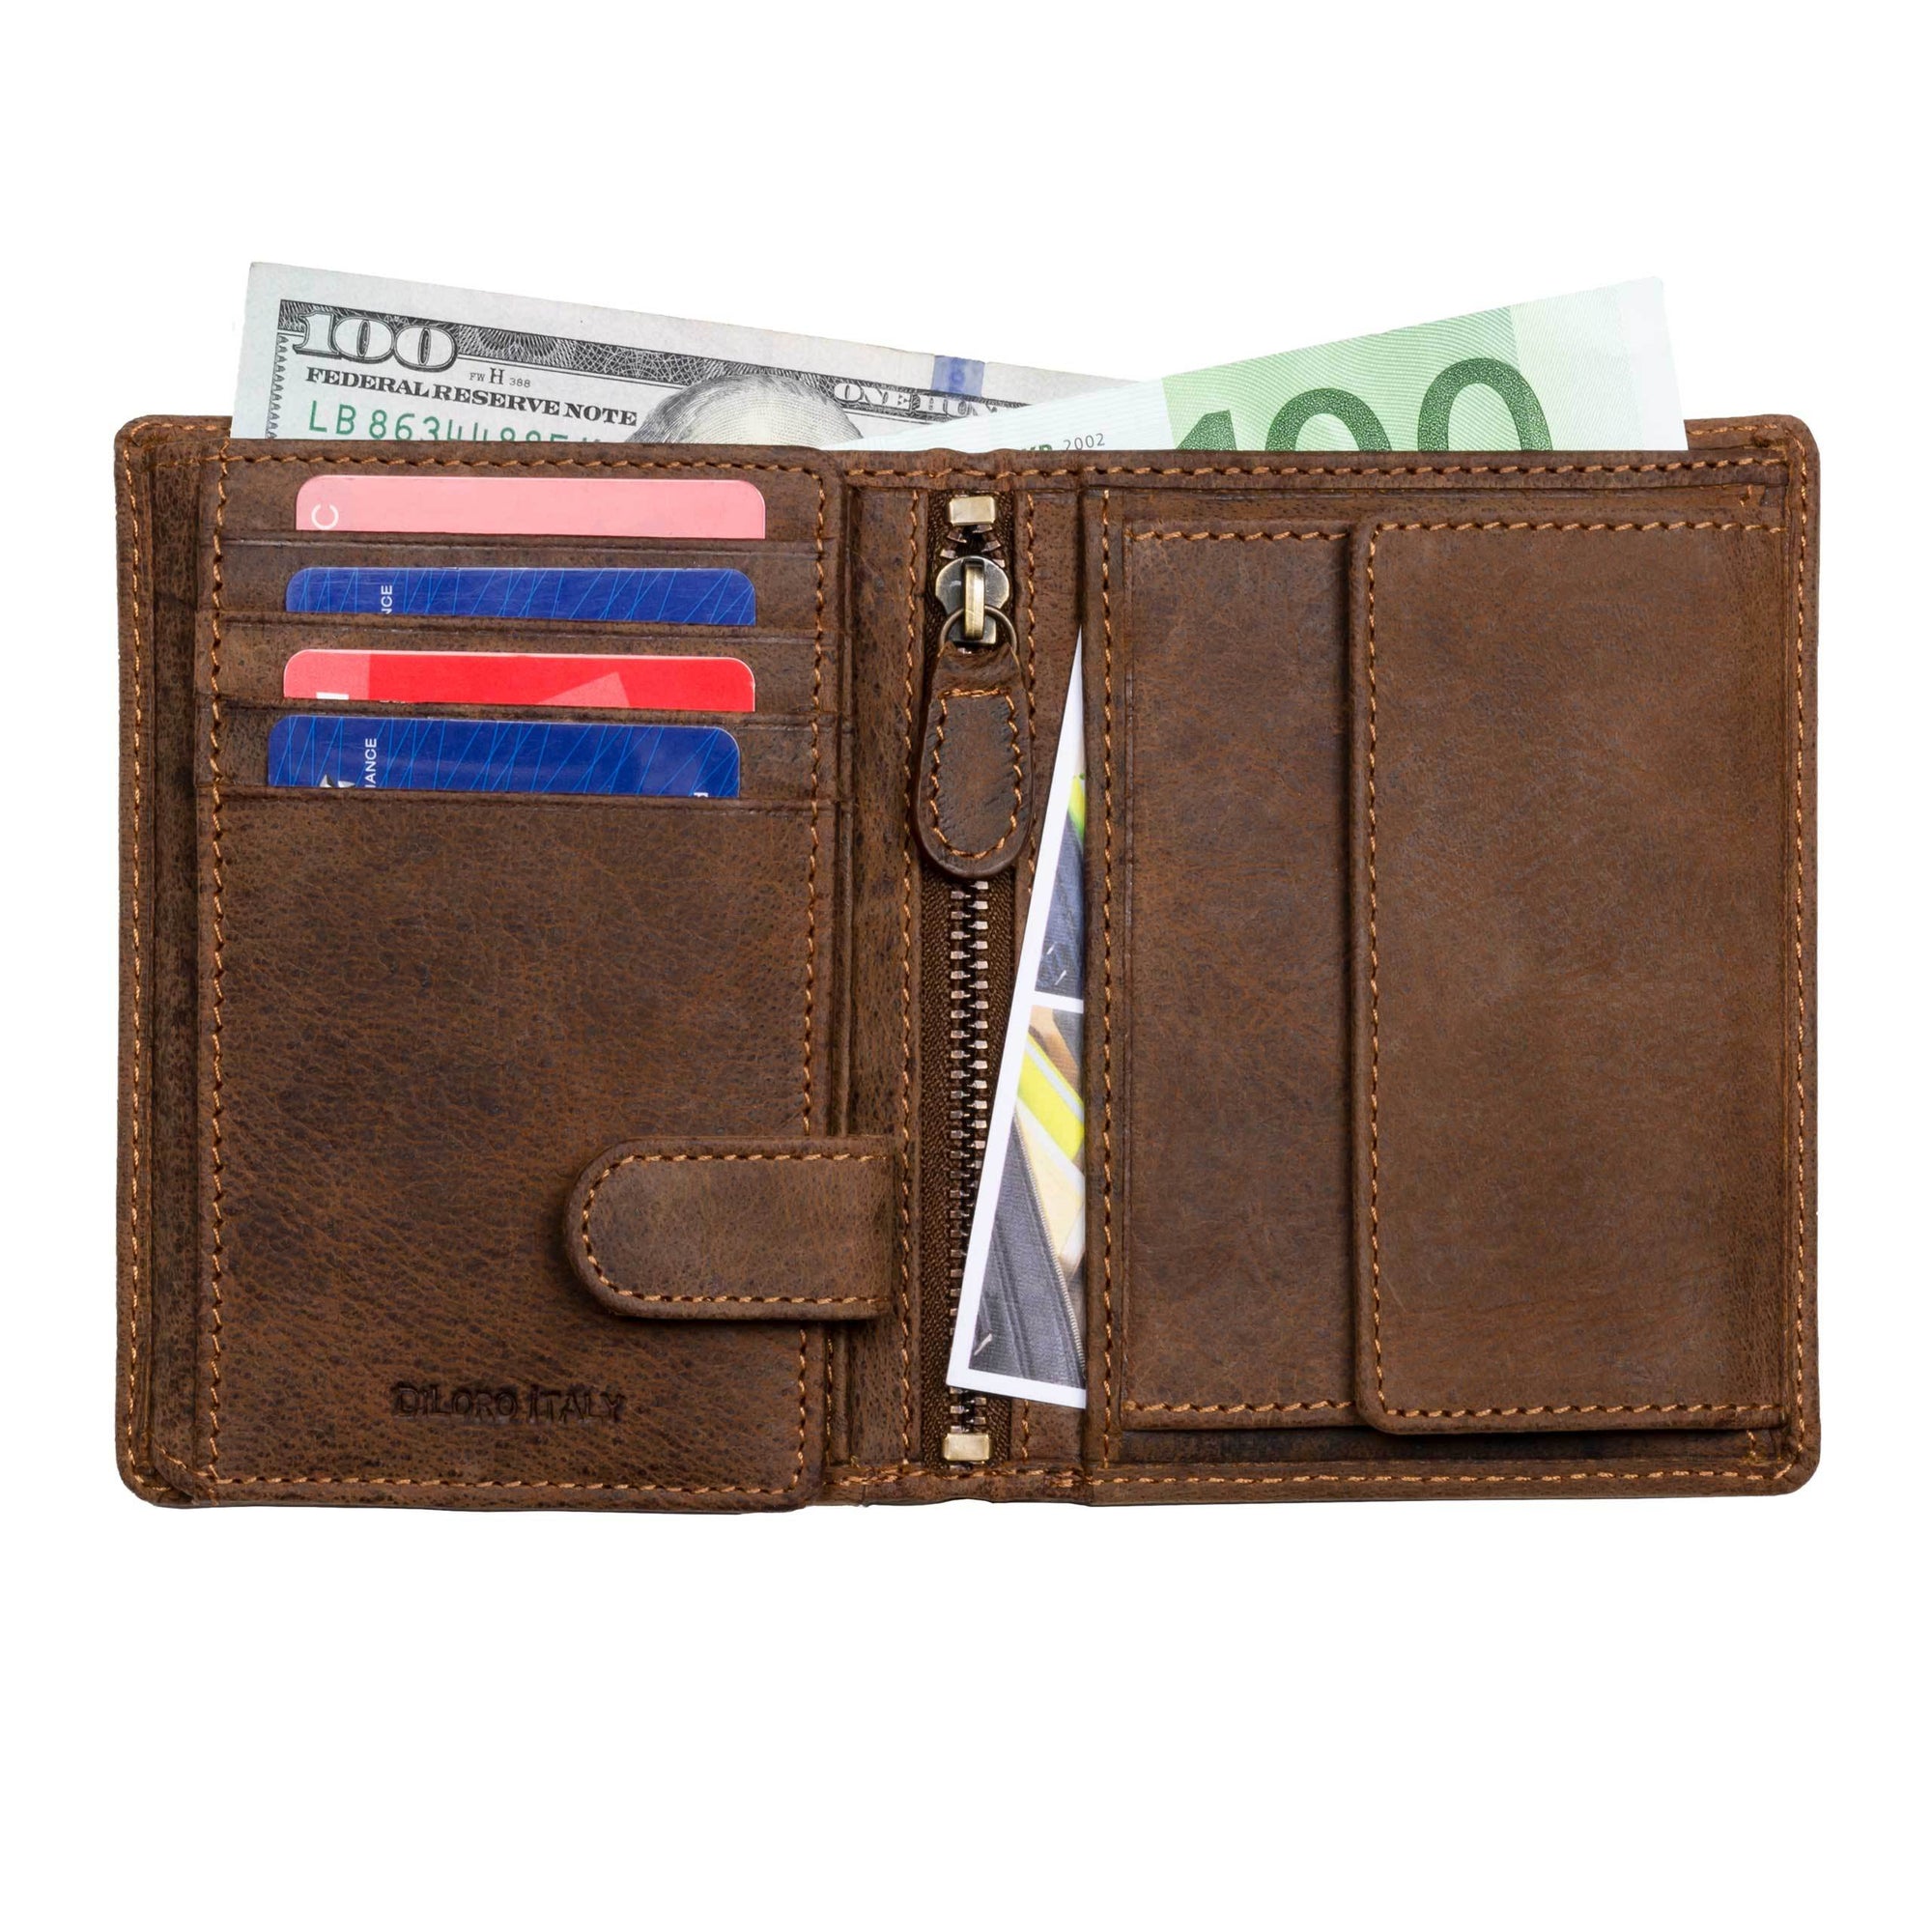 DiLoro Men's Vertical Leather Bifold Flip ID Zip Coin Wallet Dark Hunter Brown RFID Blocking Technology - Inside, Half Open View with Cash